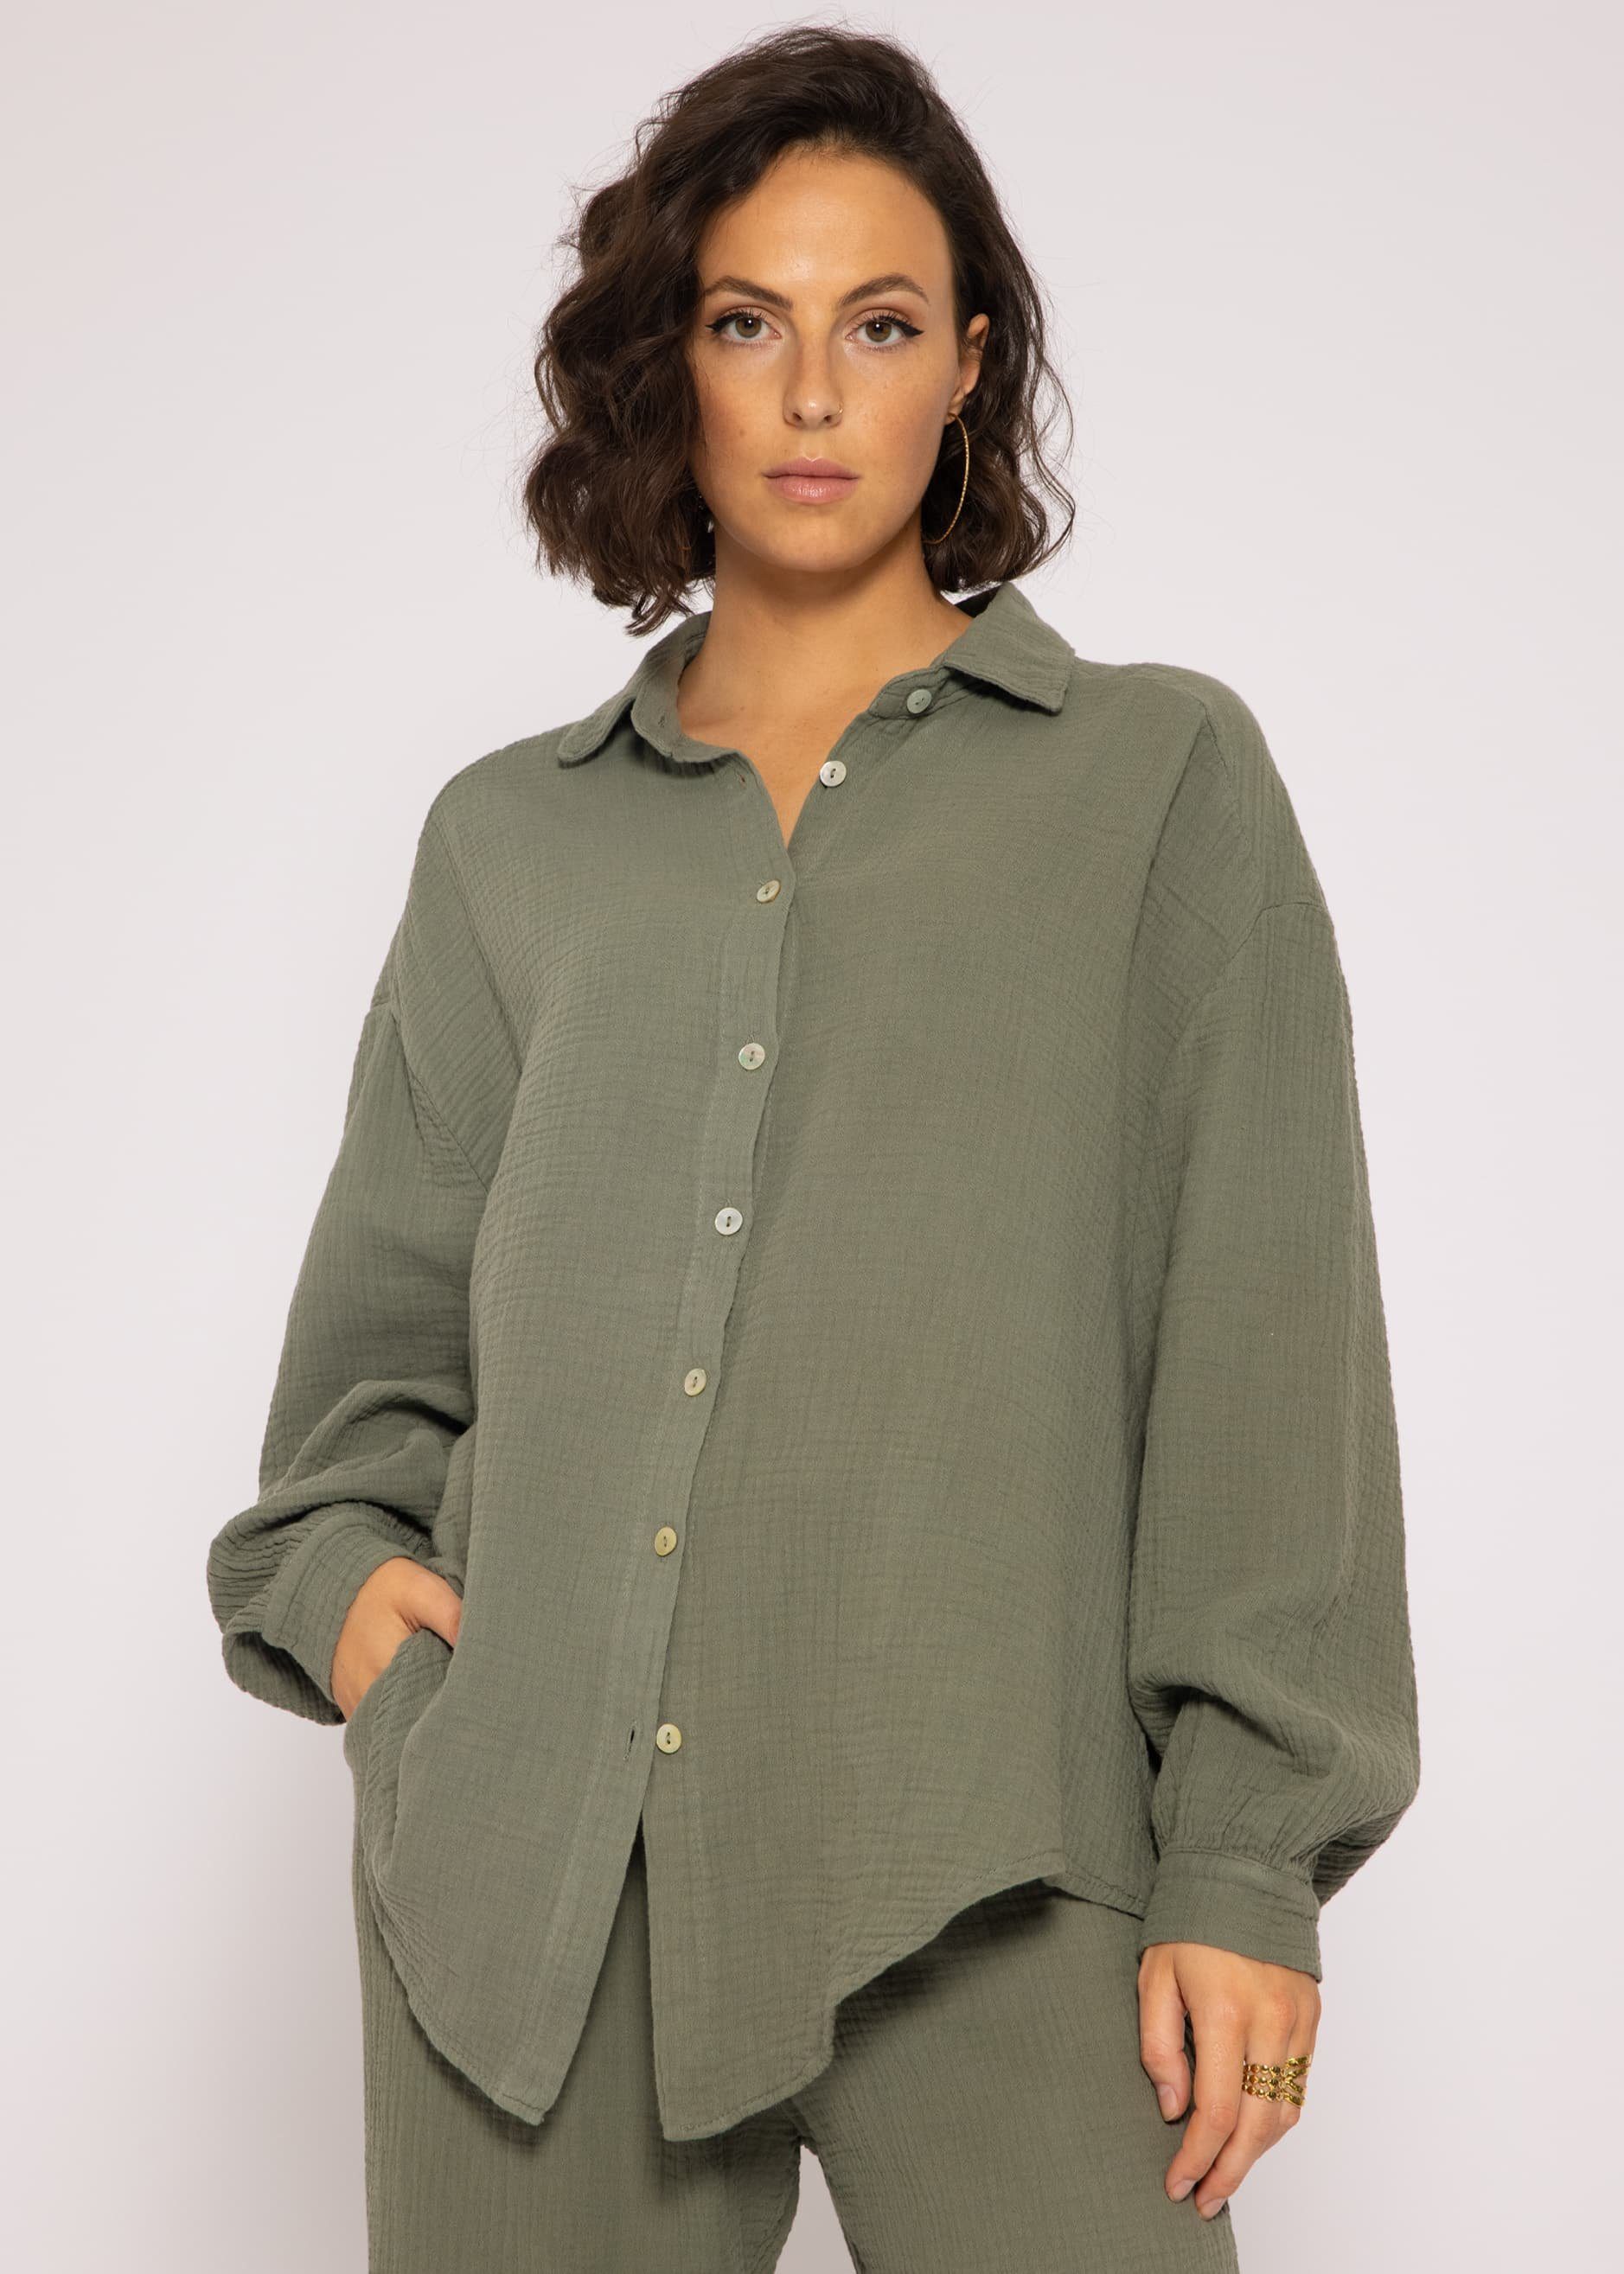 SASSYCLASSY Longbluse Oversize Musselin Bluse Damen Langarm Hemdbluse lang aus Baumwolle mit V-Ausschnitt, One Size (Gr. 36-48) Khaki